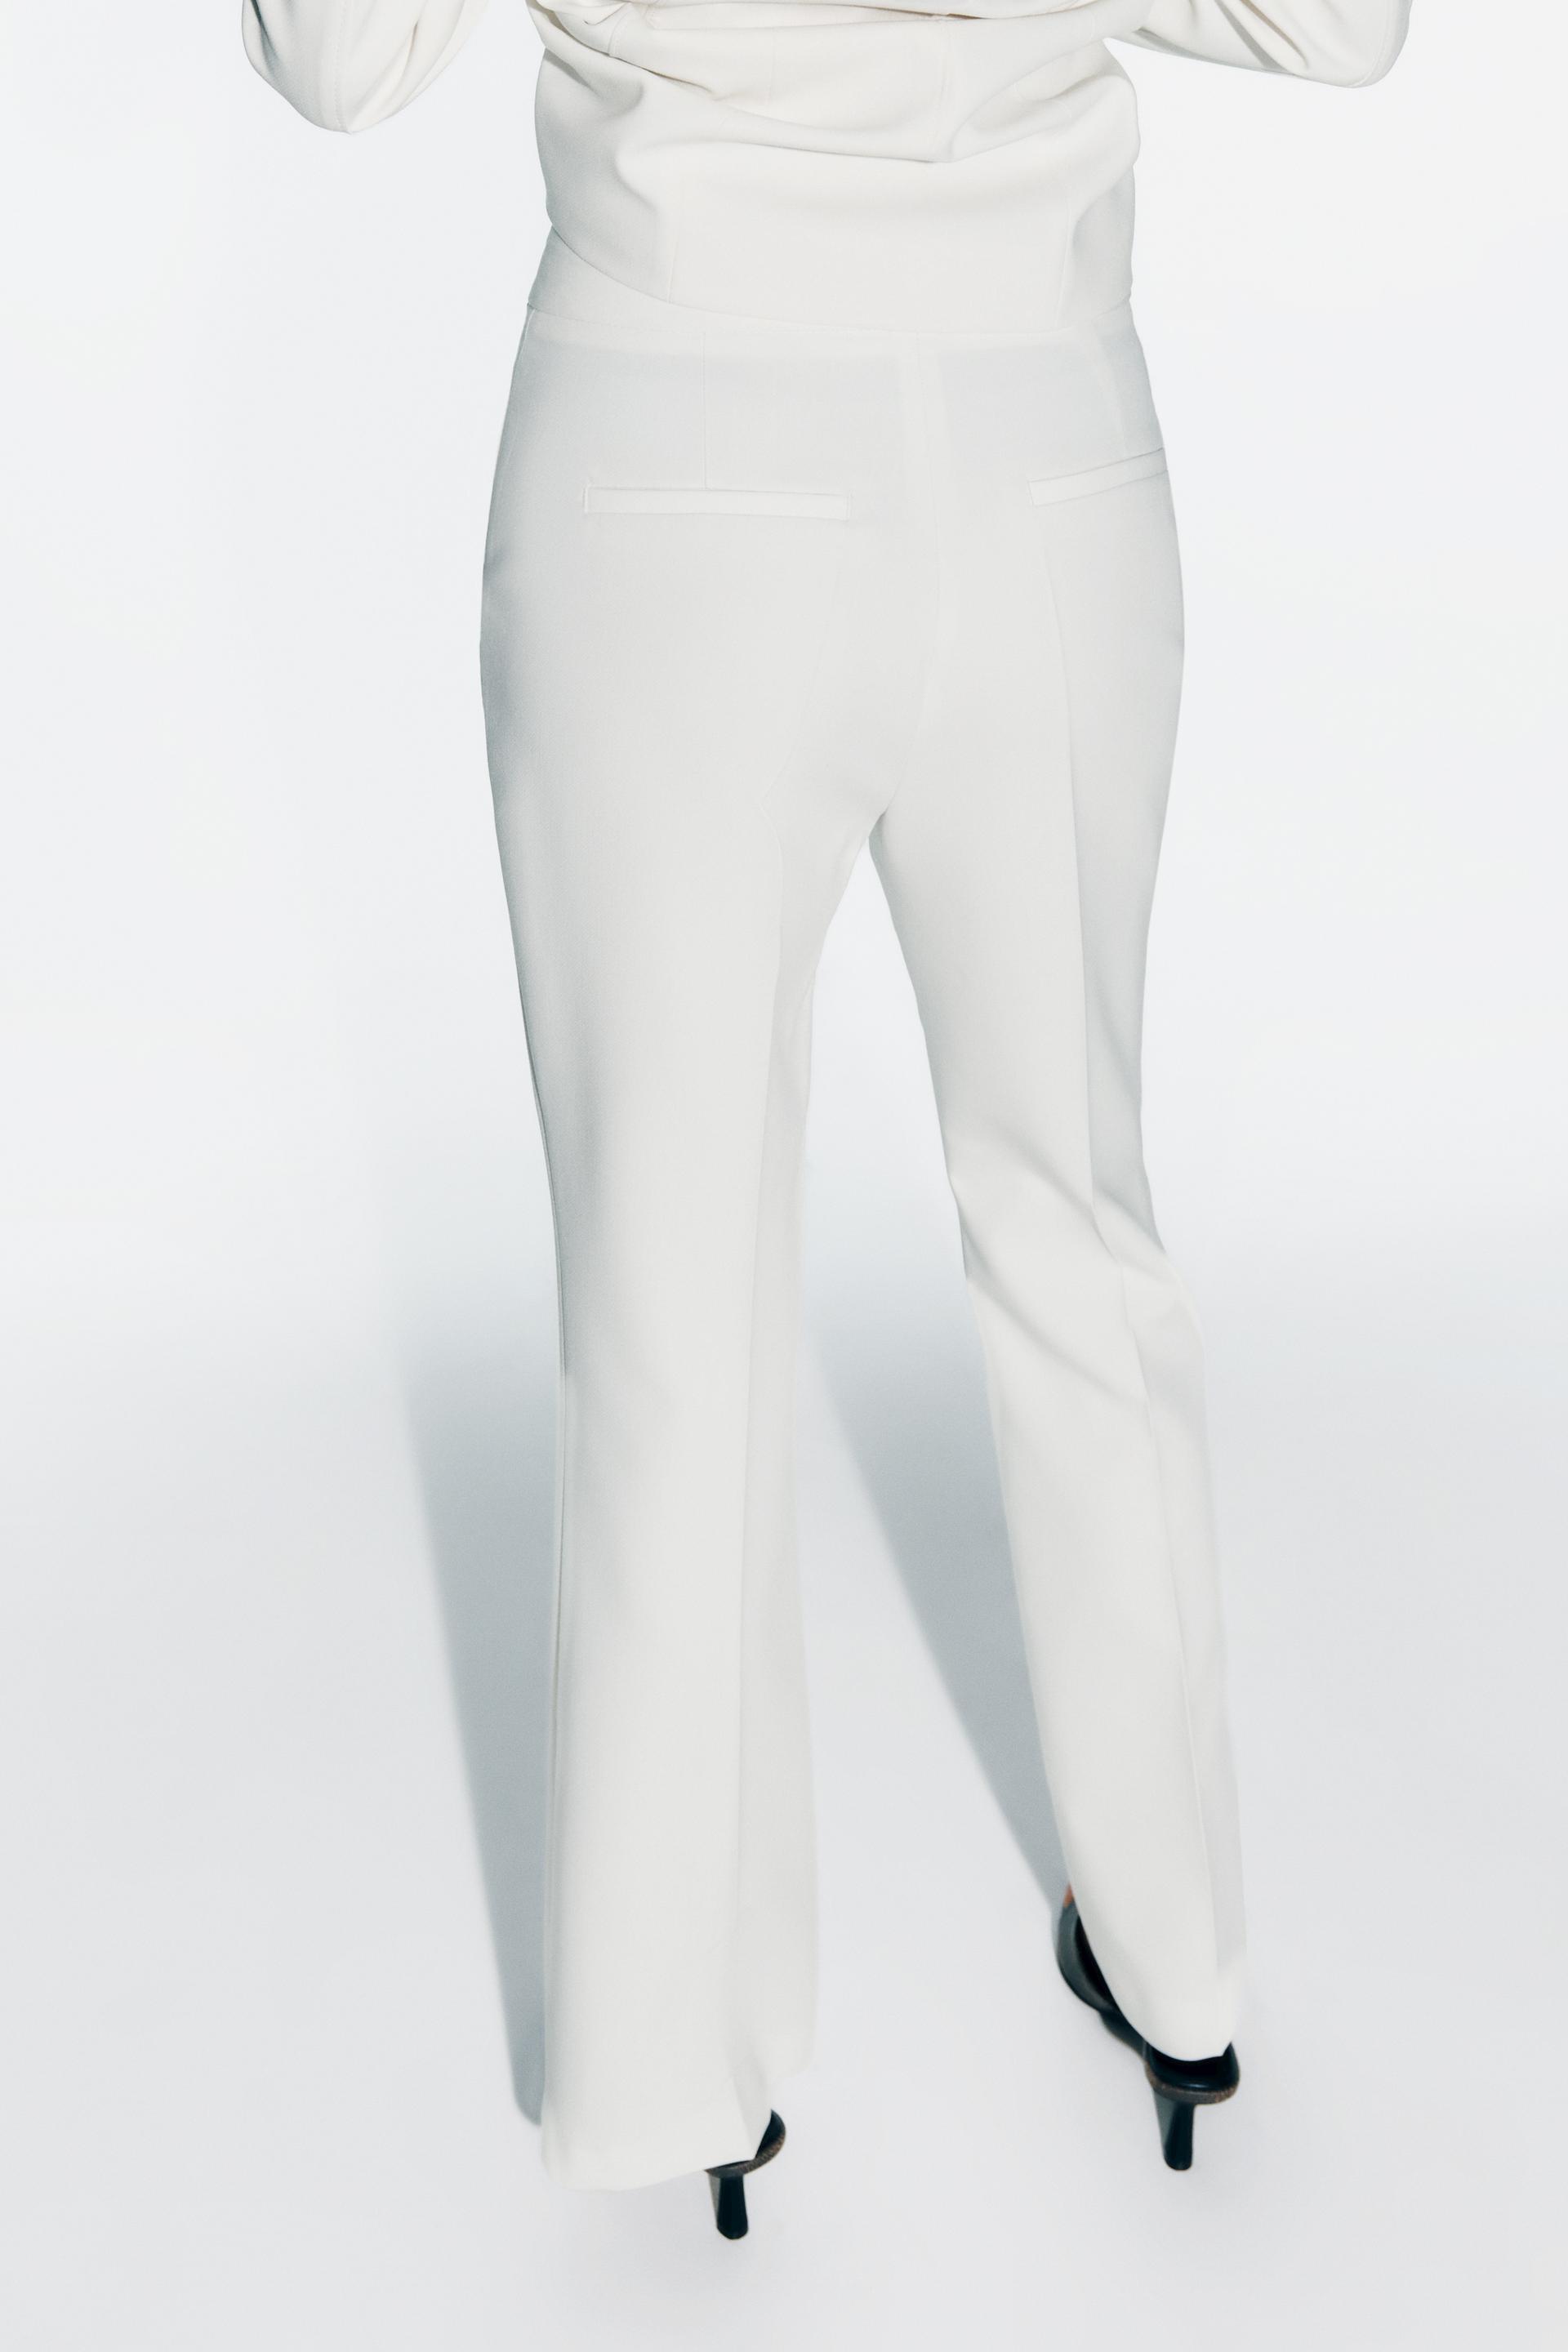 Zara High Waist Pants Oyster White Size S